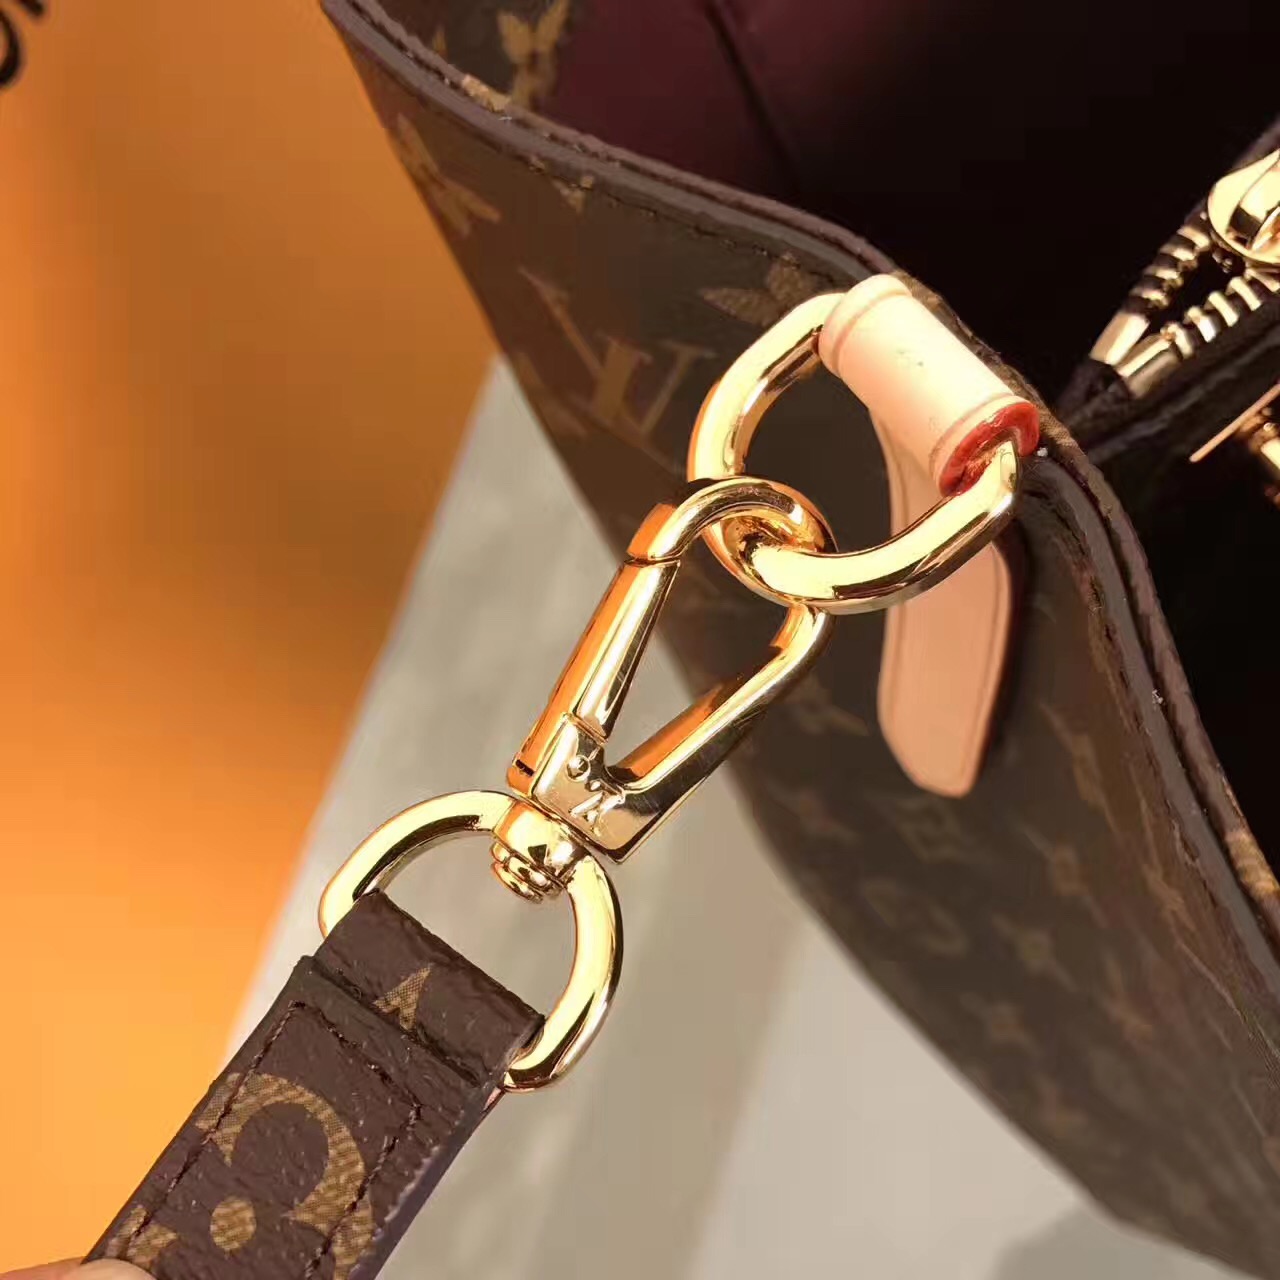 LV Louis Vuitton large monogram Montaigne handbags